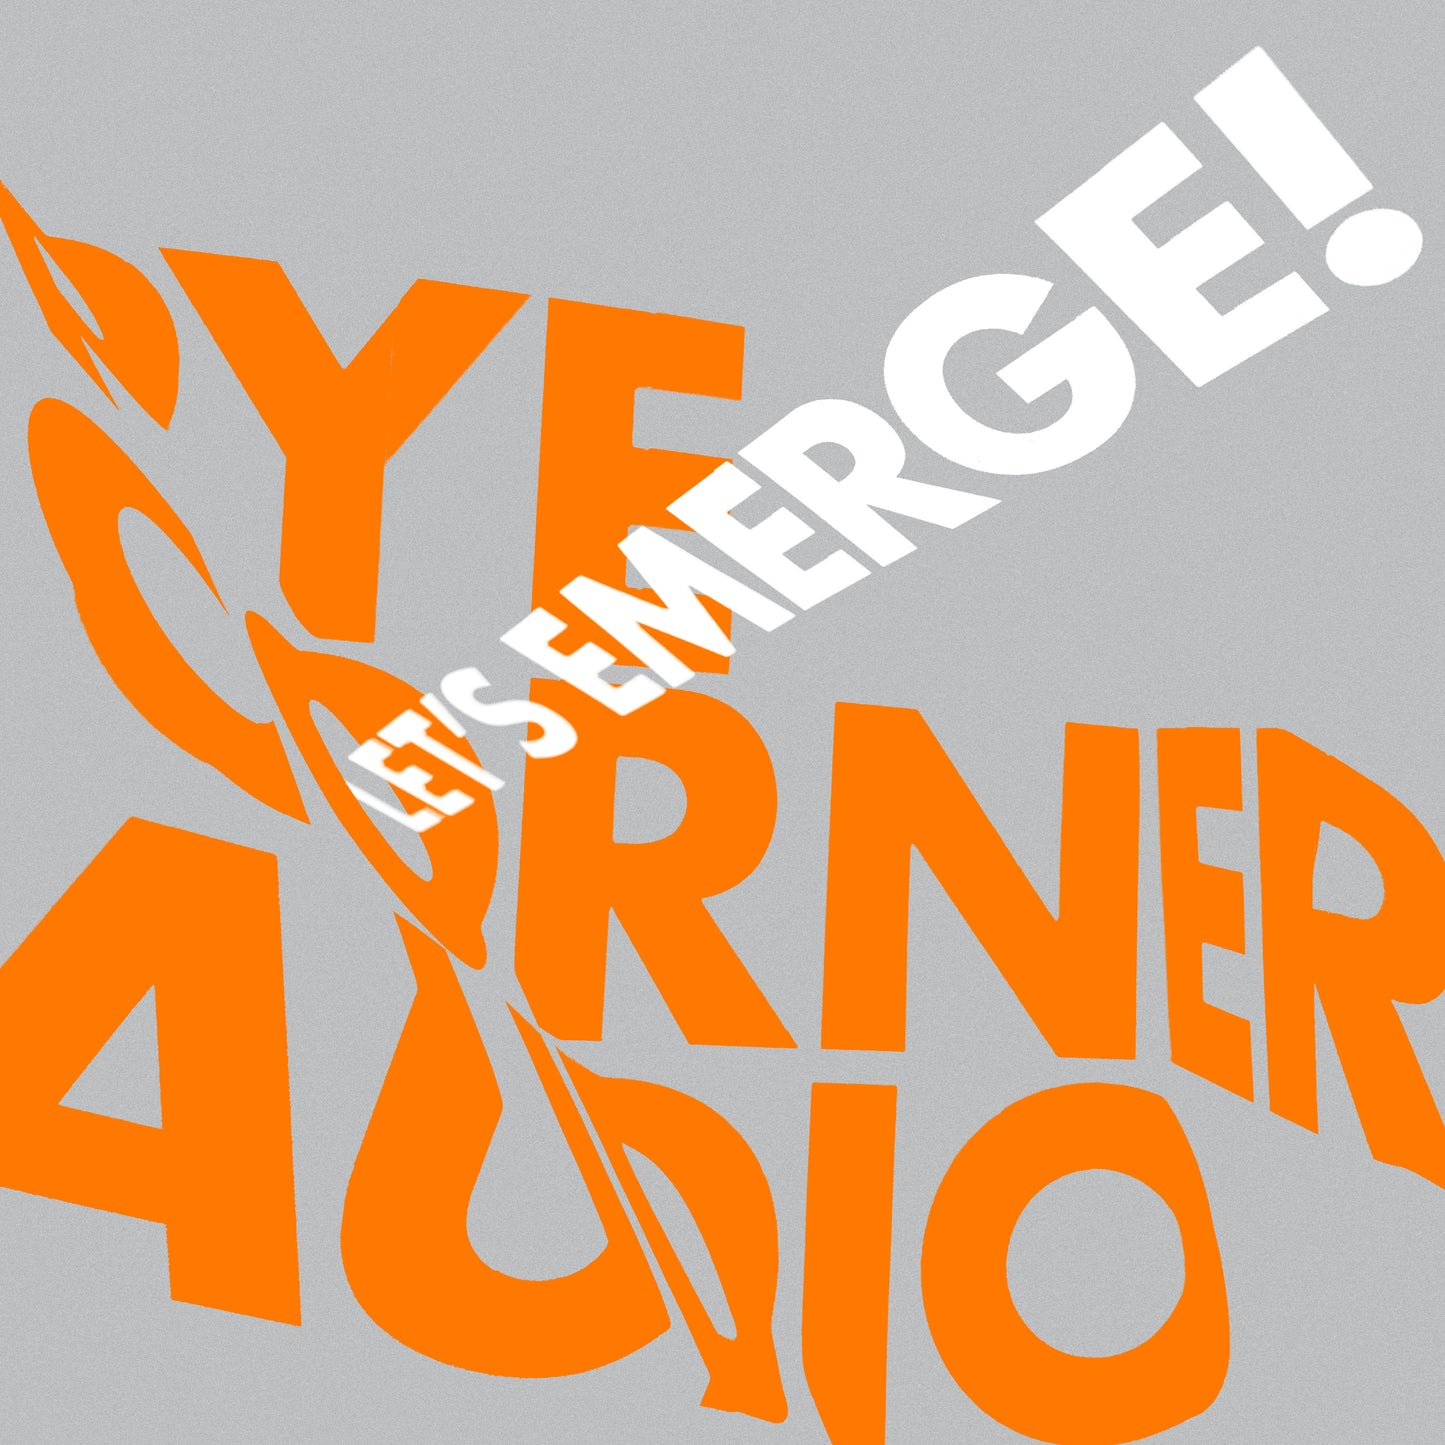 Pye Corner Audio 'Let's Emerge!' LP